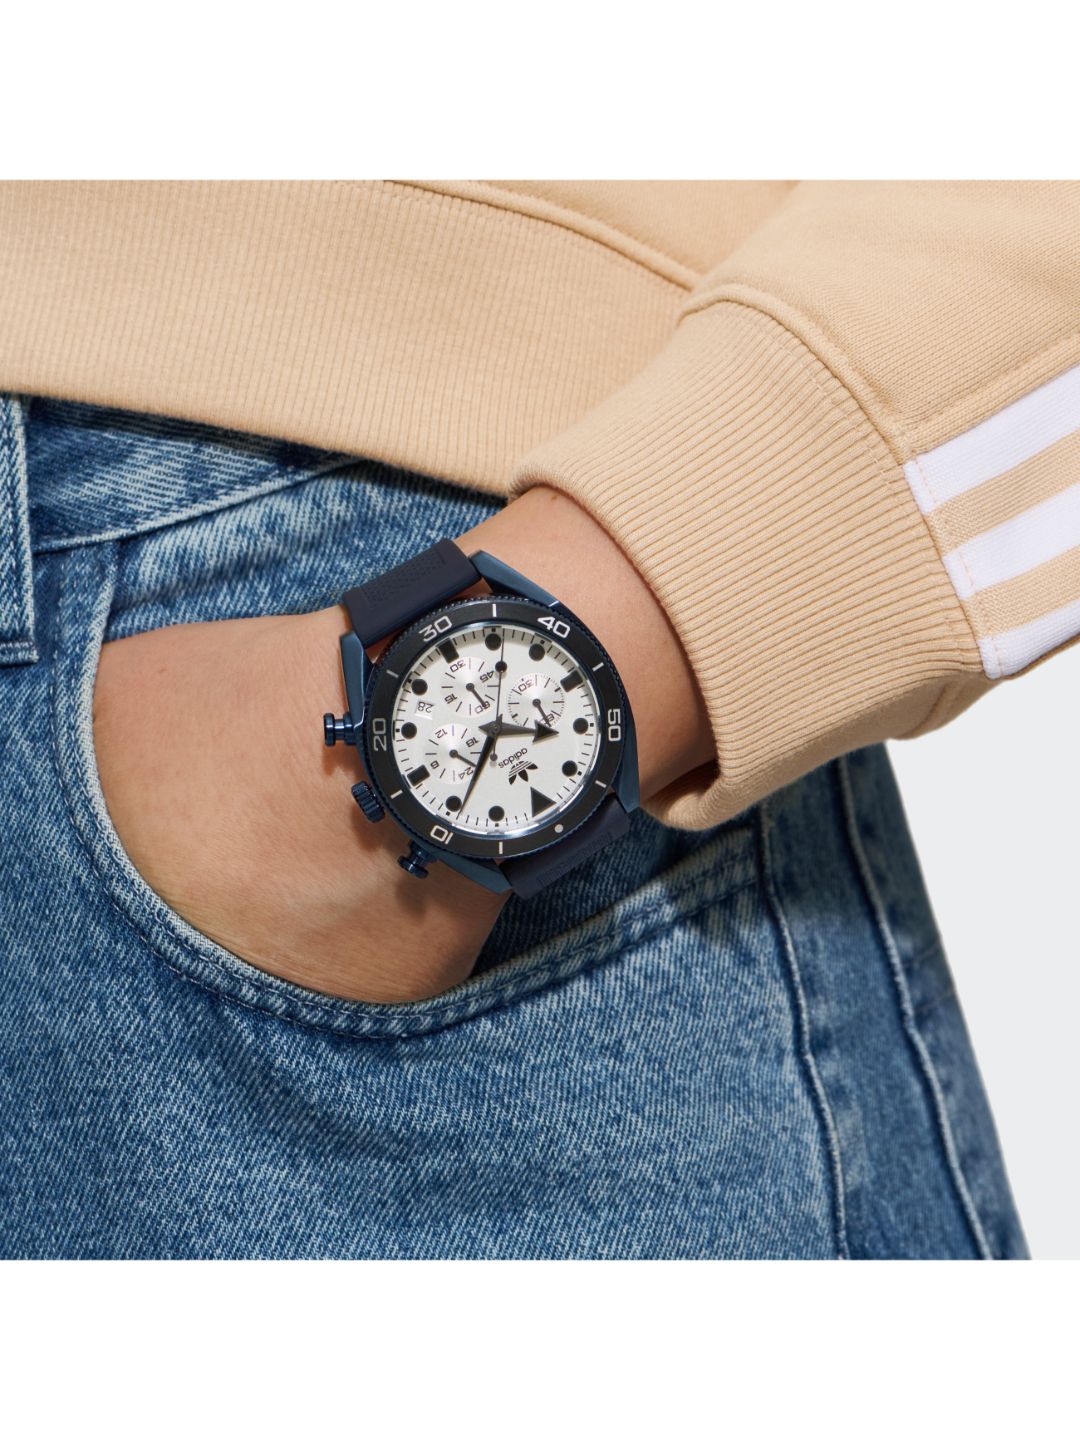 Adidas Originals Silver Dial Unisex Watch - AOFH23004